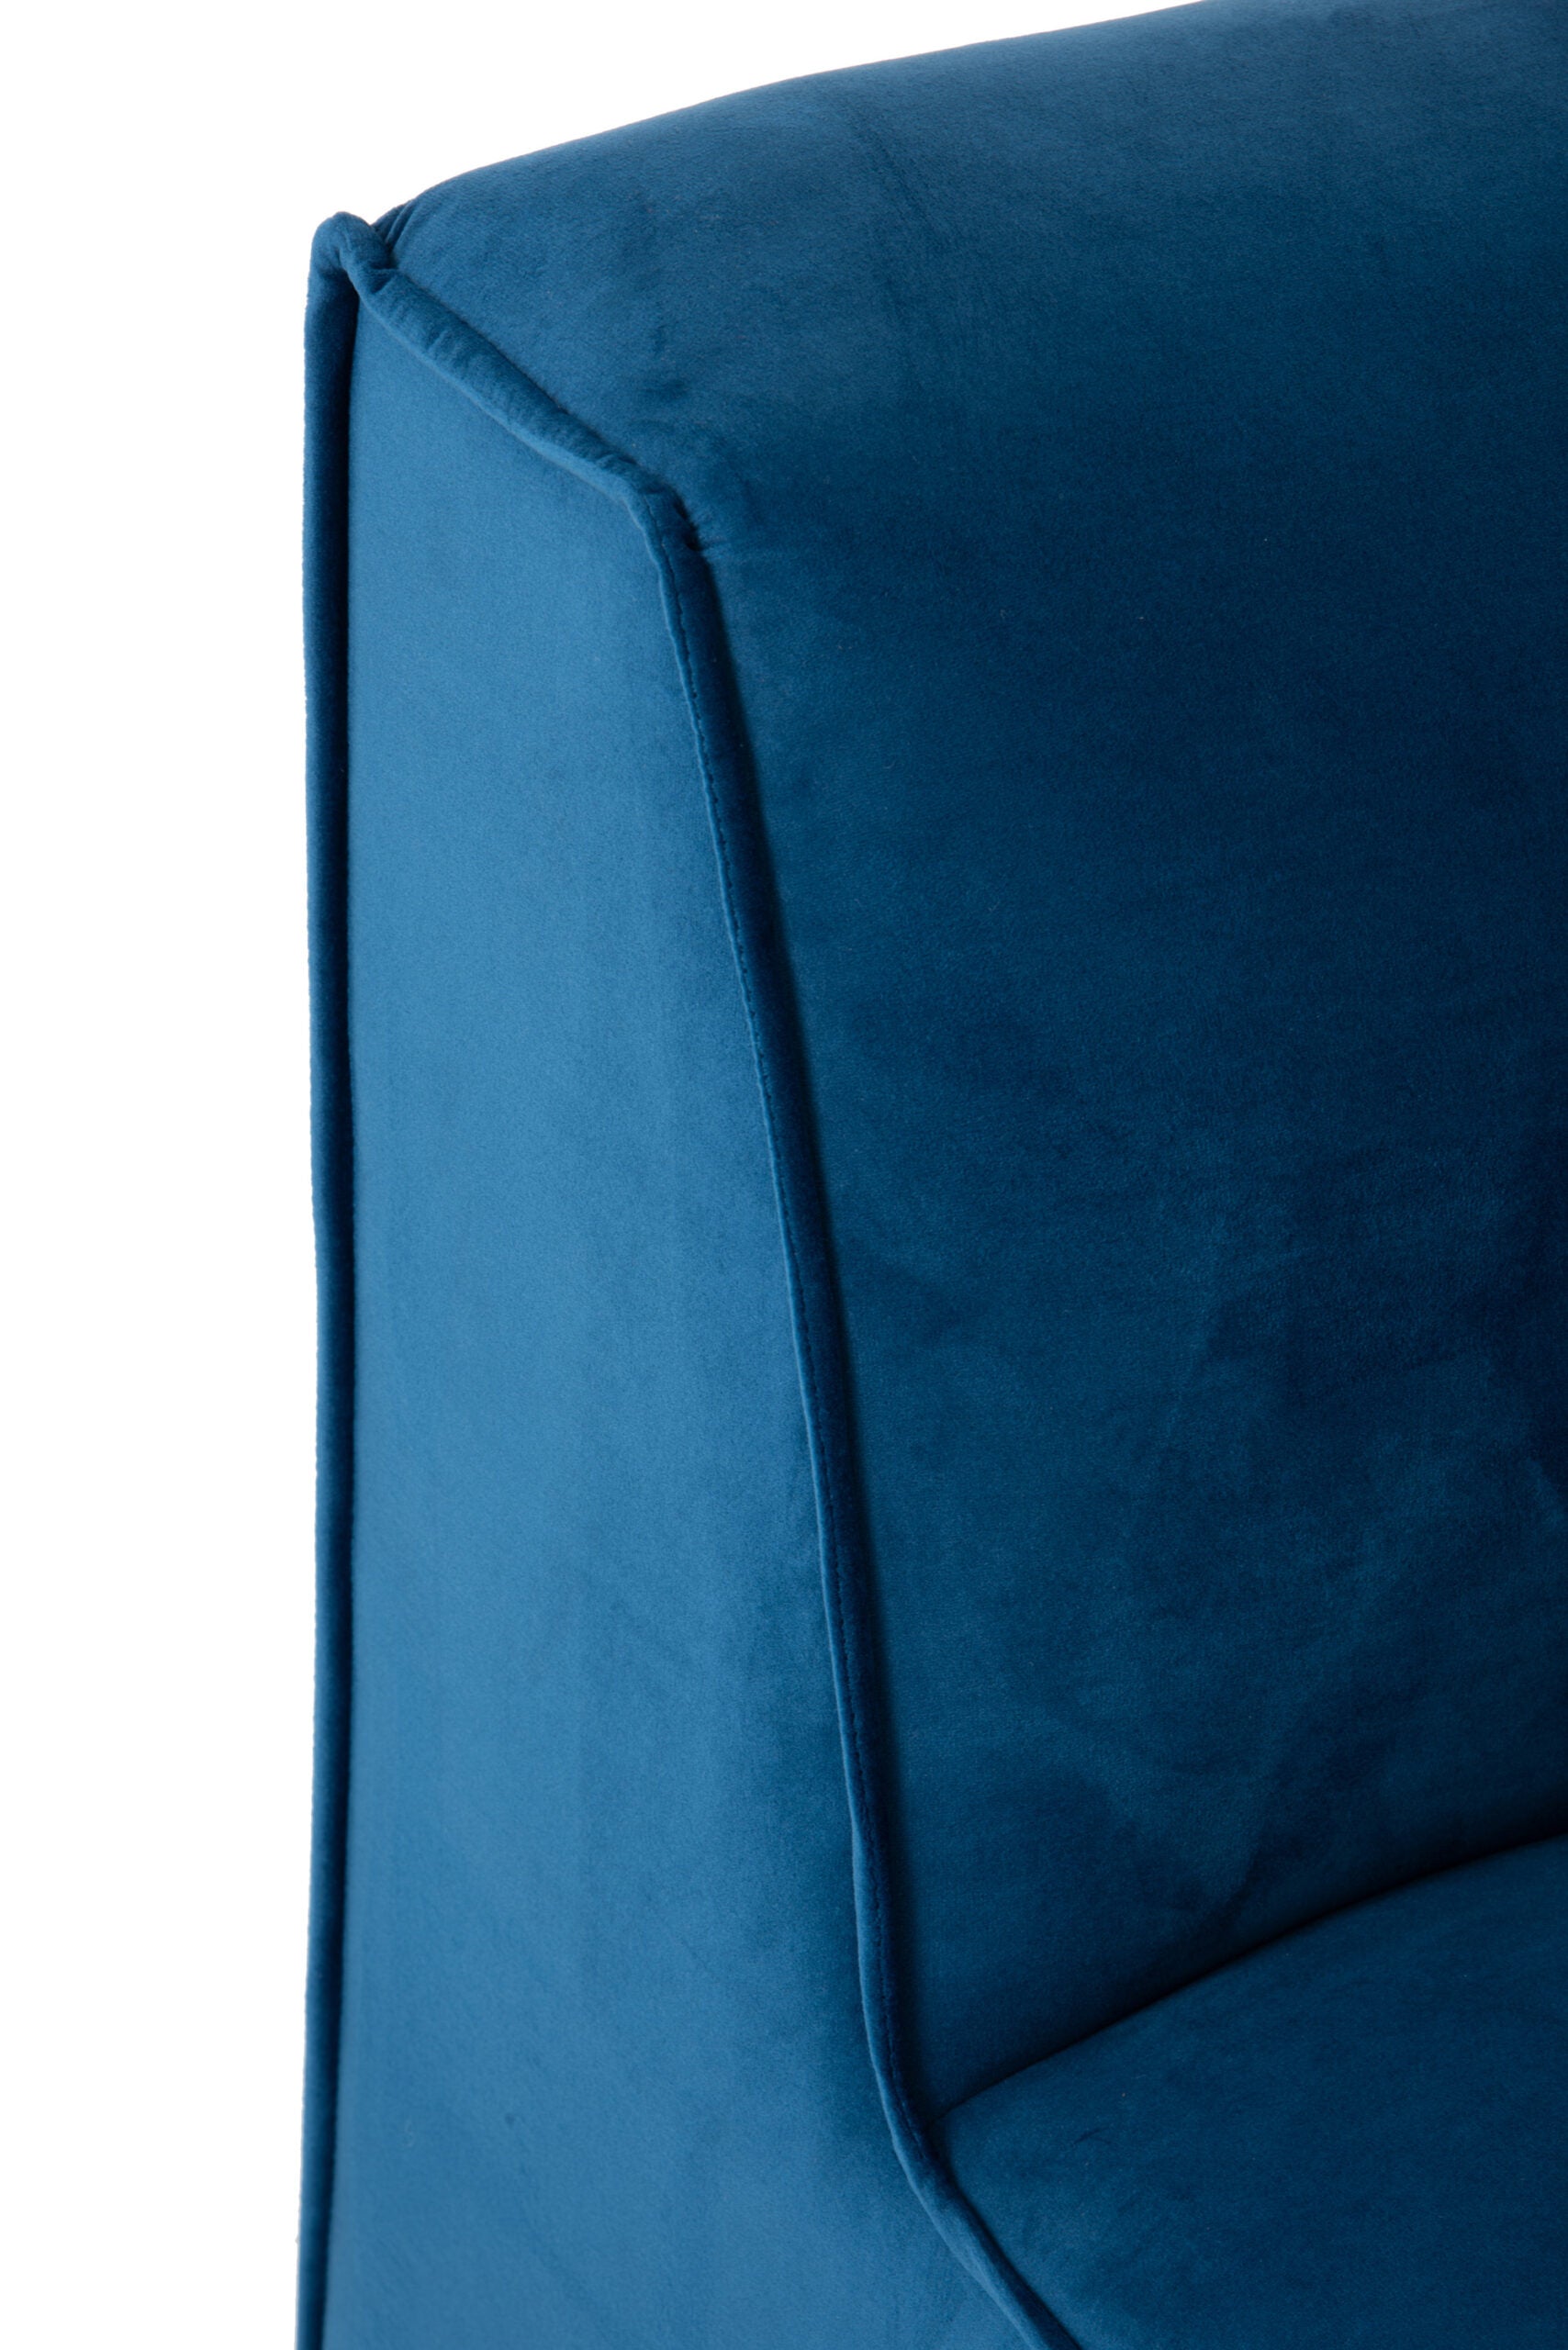 Sessel "Textil Blau"